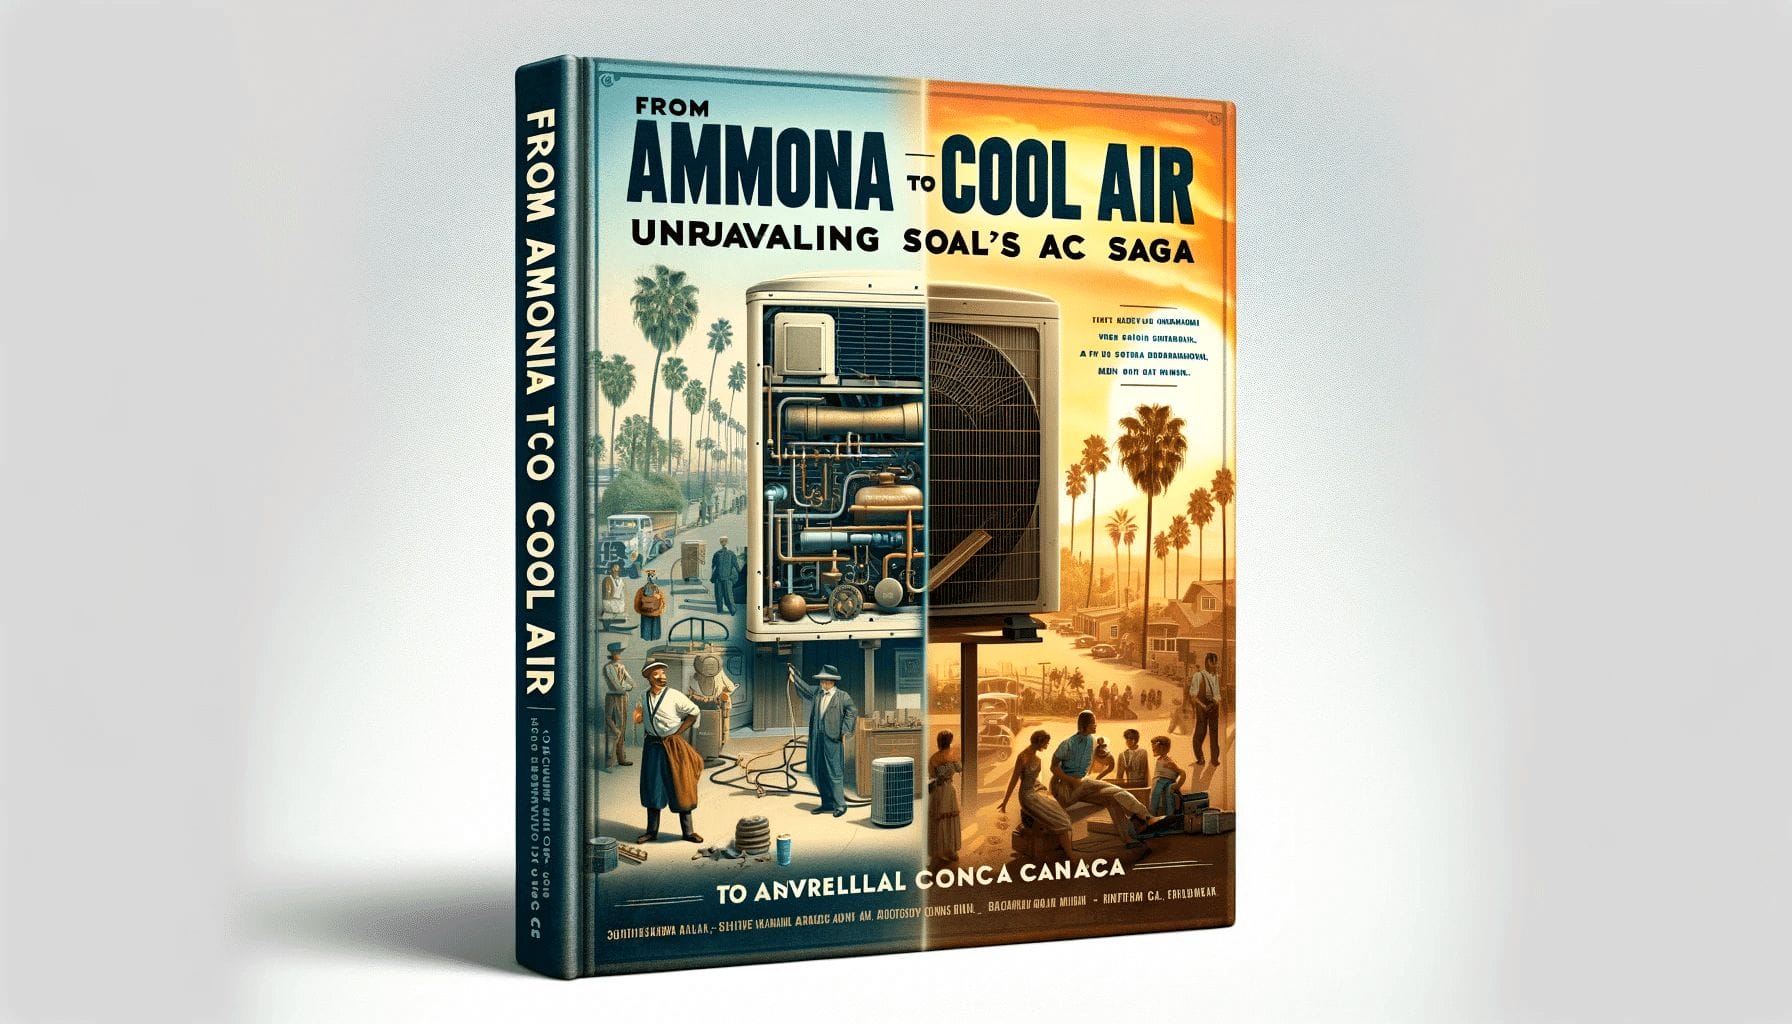 The ammonia-cool air book cover.